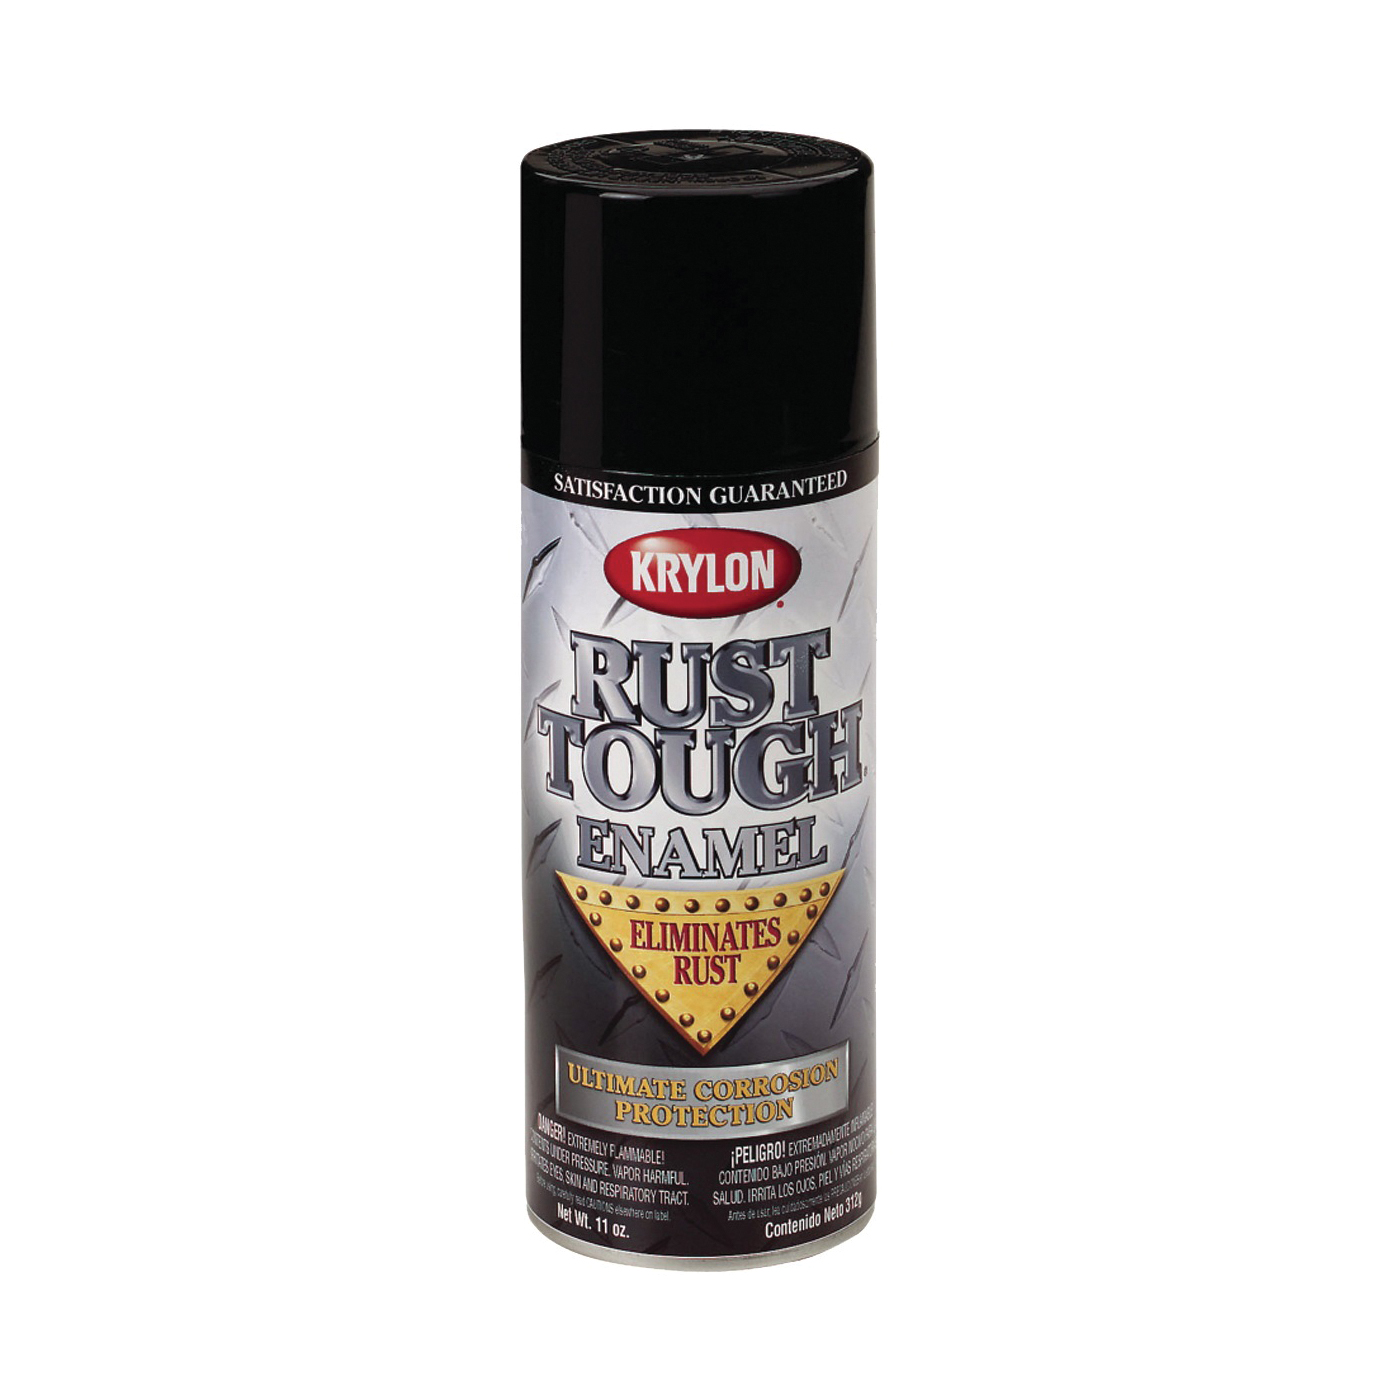 Rust Tough K09202007 Rust Preventative Spray Paint, Gloss, Black, 12 oz, Can